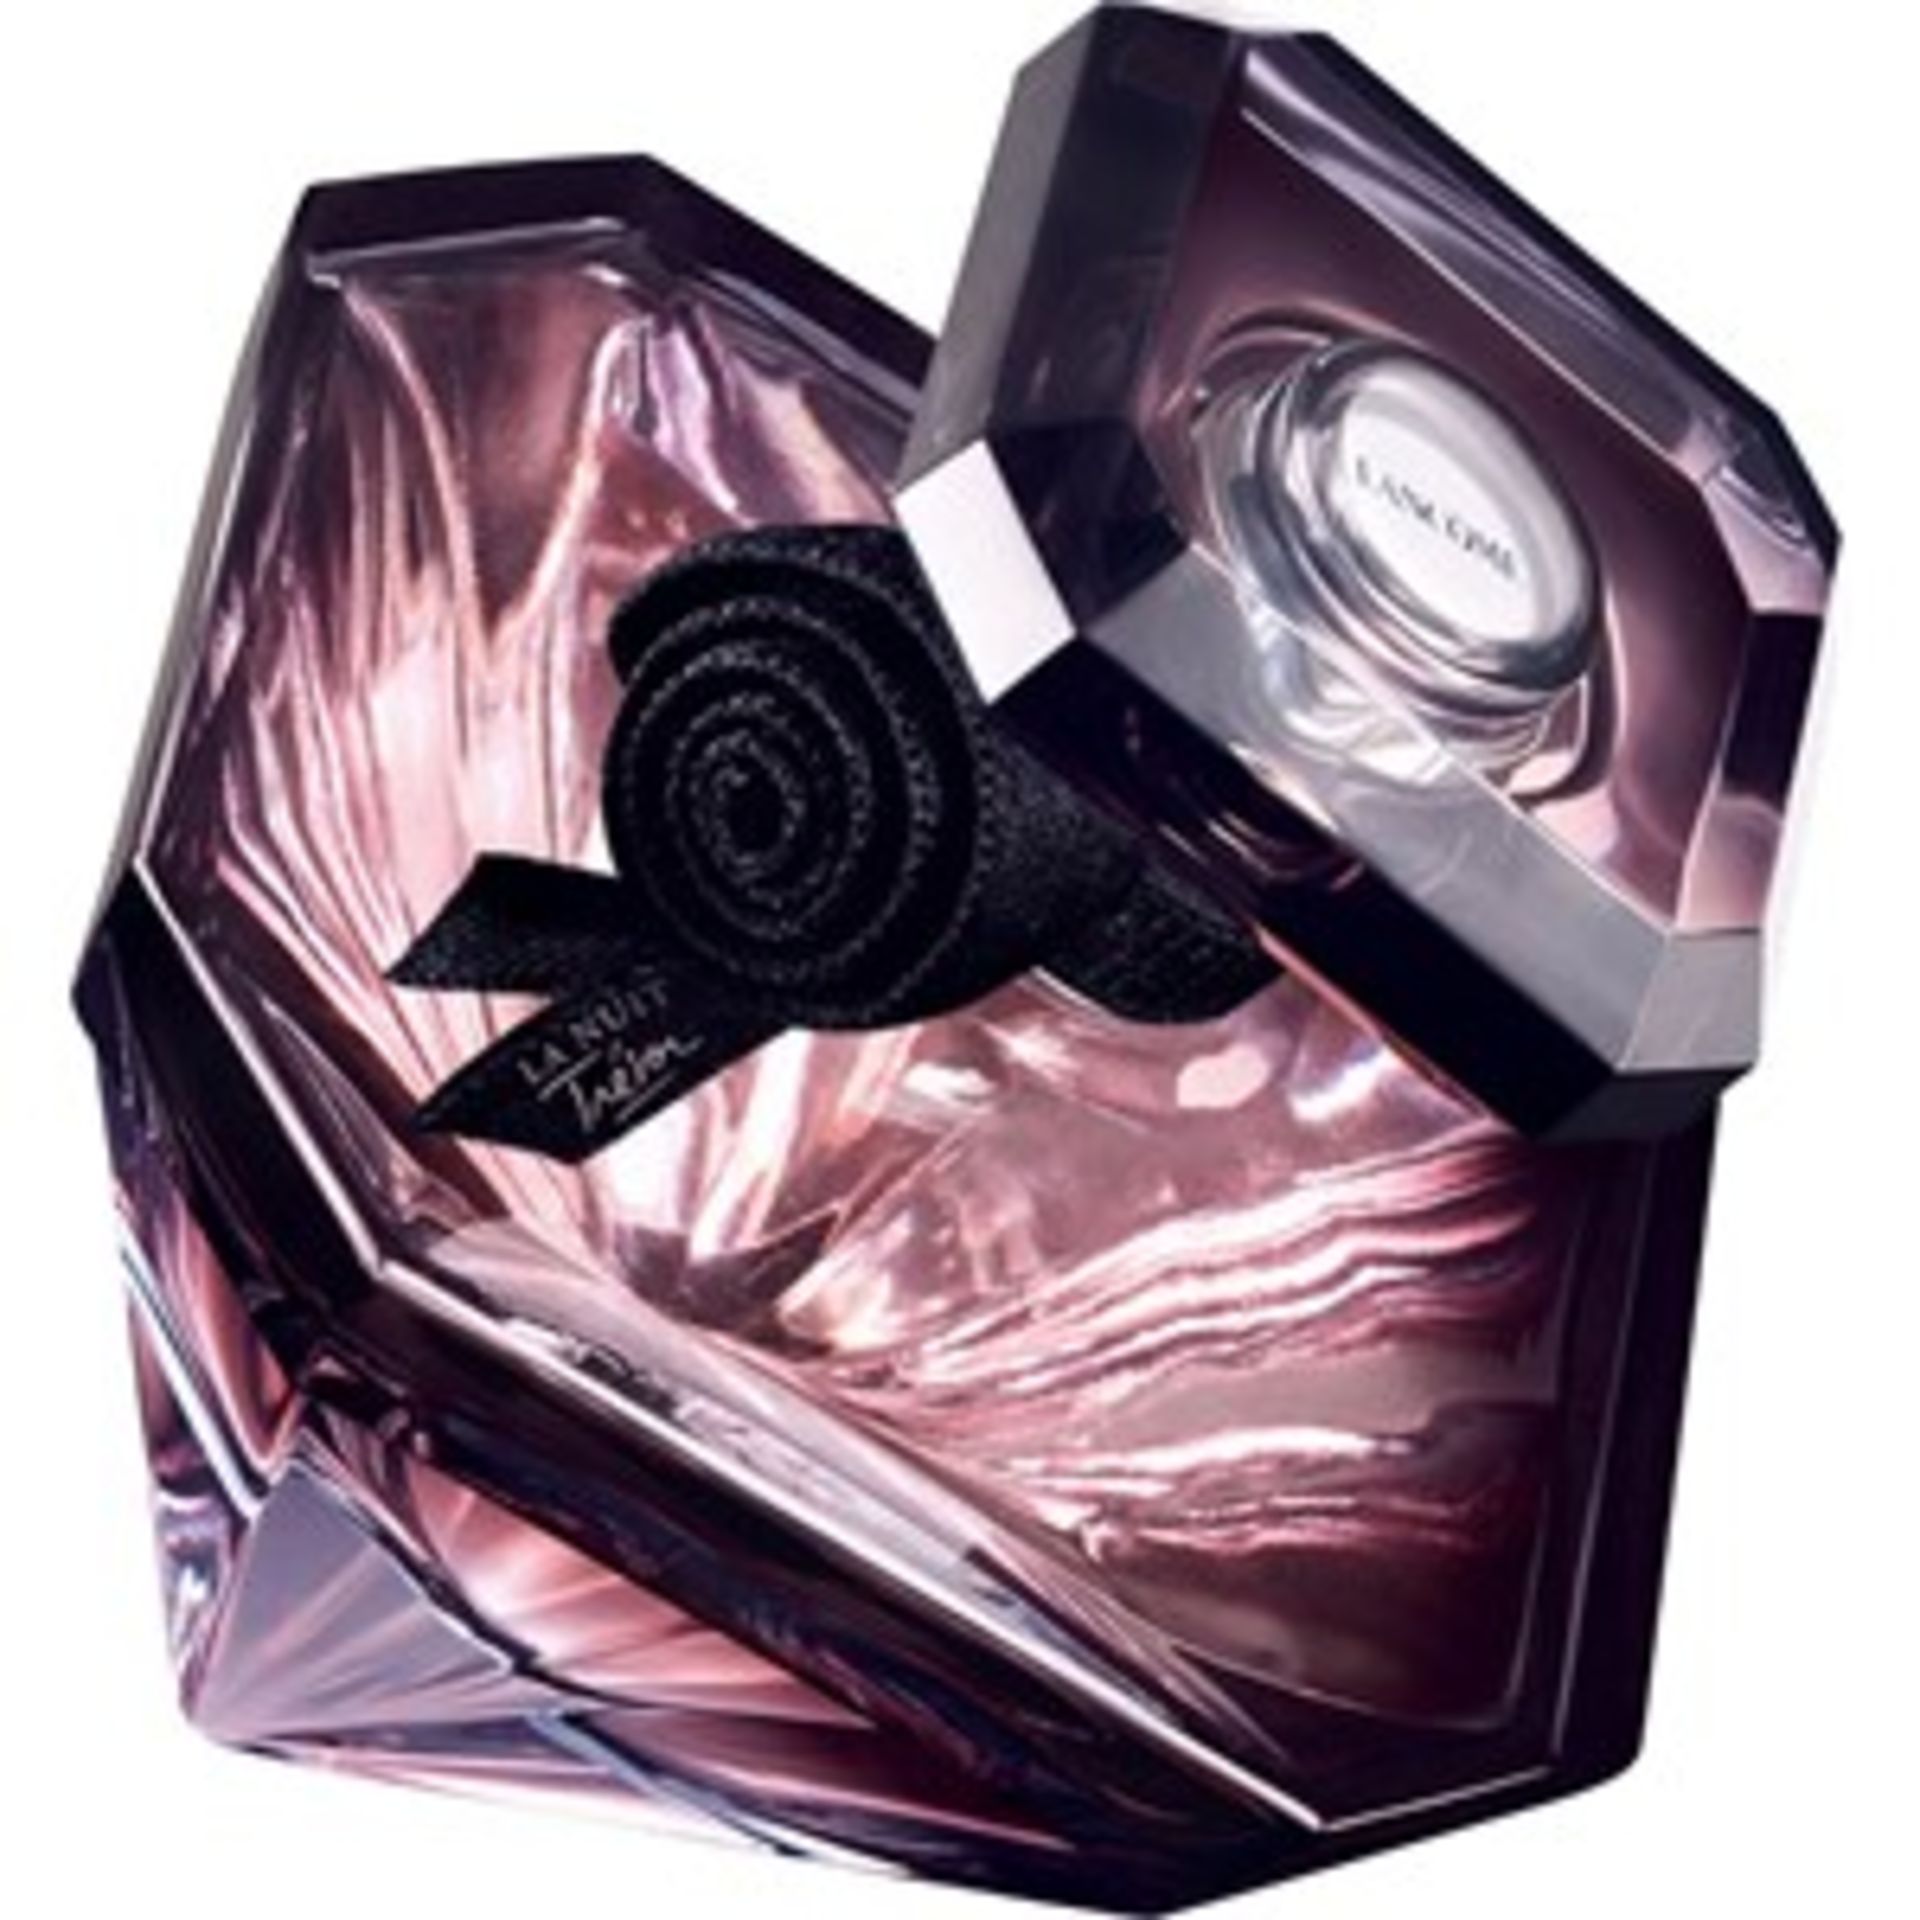 RRP £82 Boxed Full 75Ml La Nuit Tresor Perfume L'Eau De Parfum Ex Display